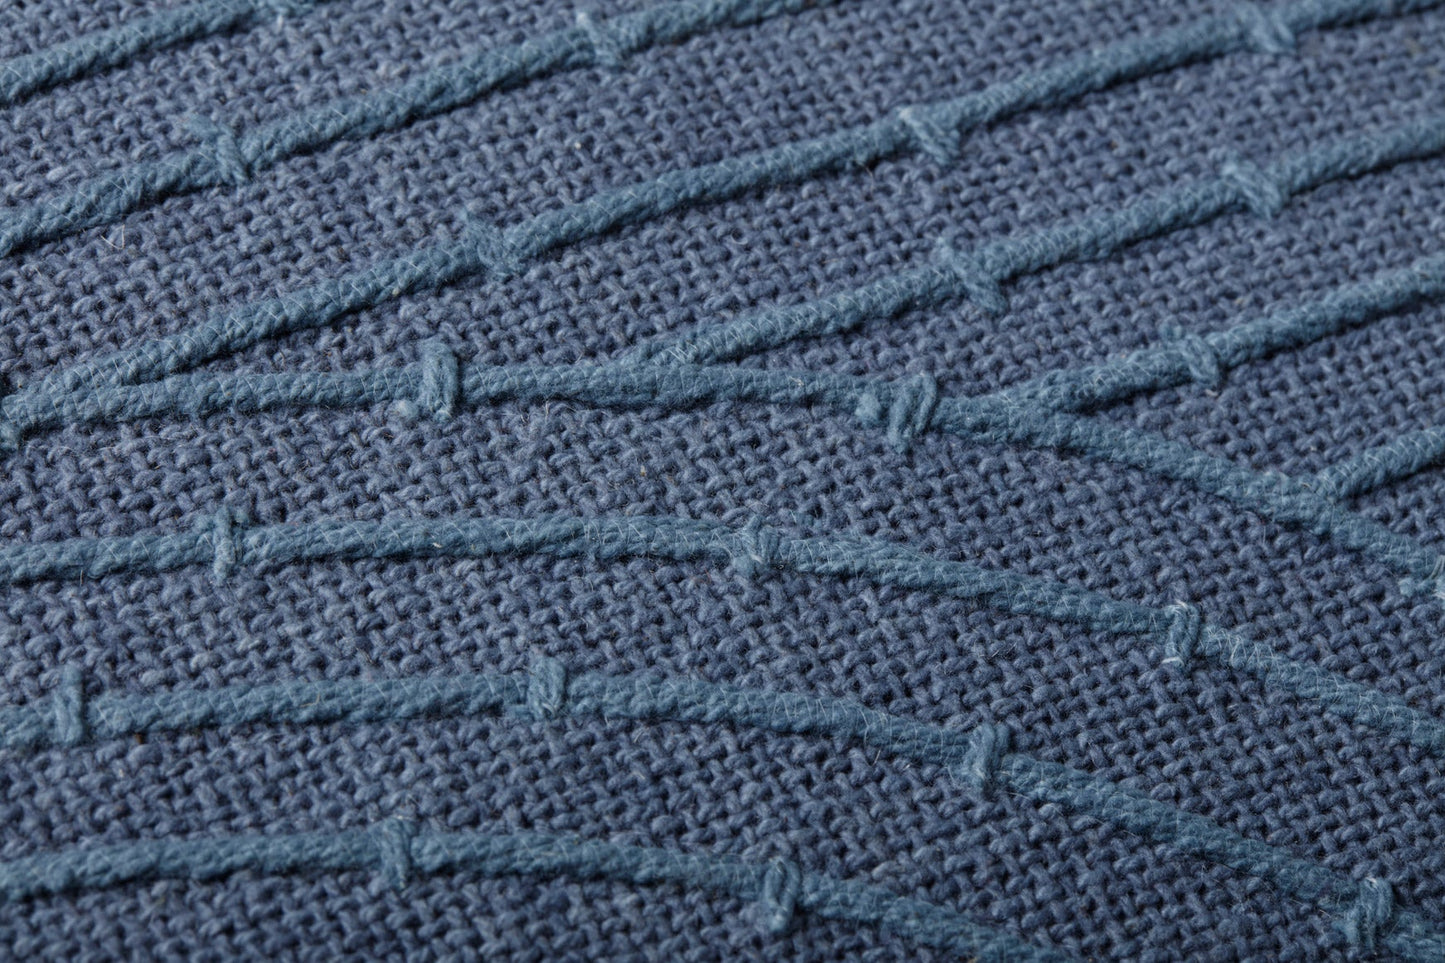 Justina Blakeney x Loloi Embroidered Pillow - Stone Blue (Set of 2)